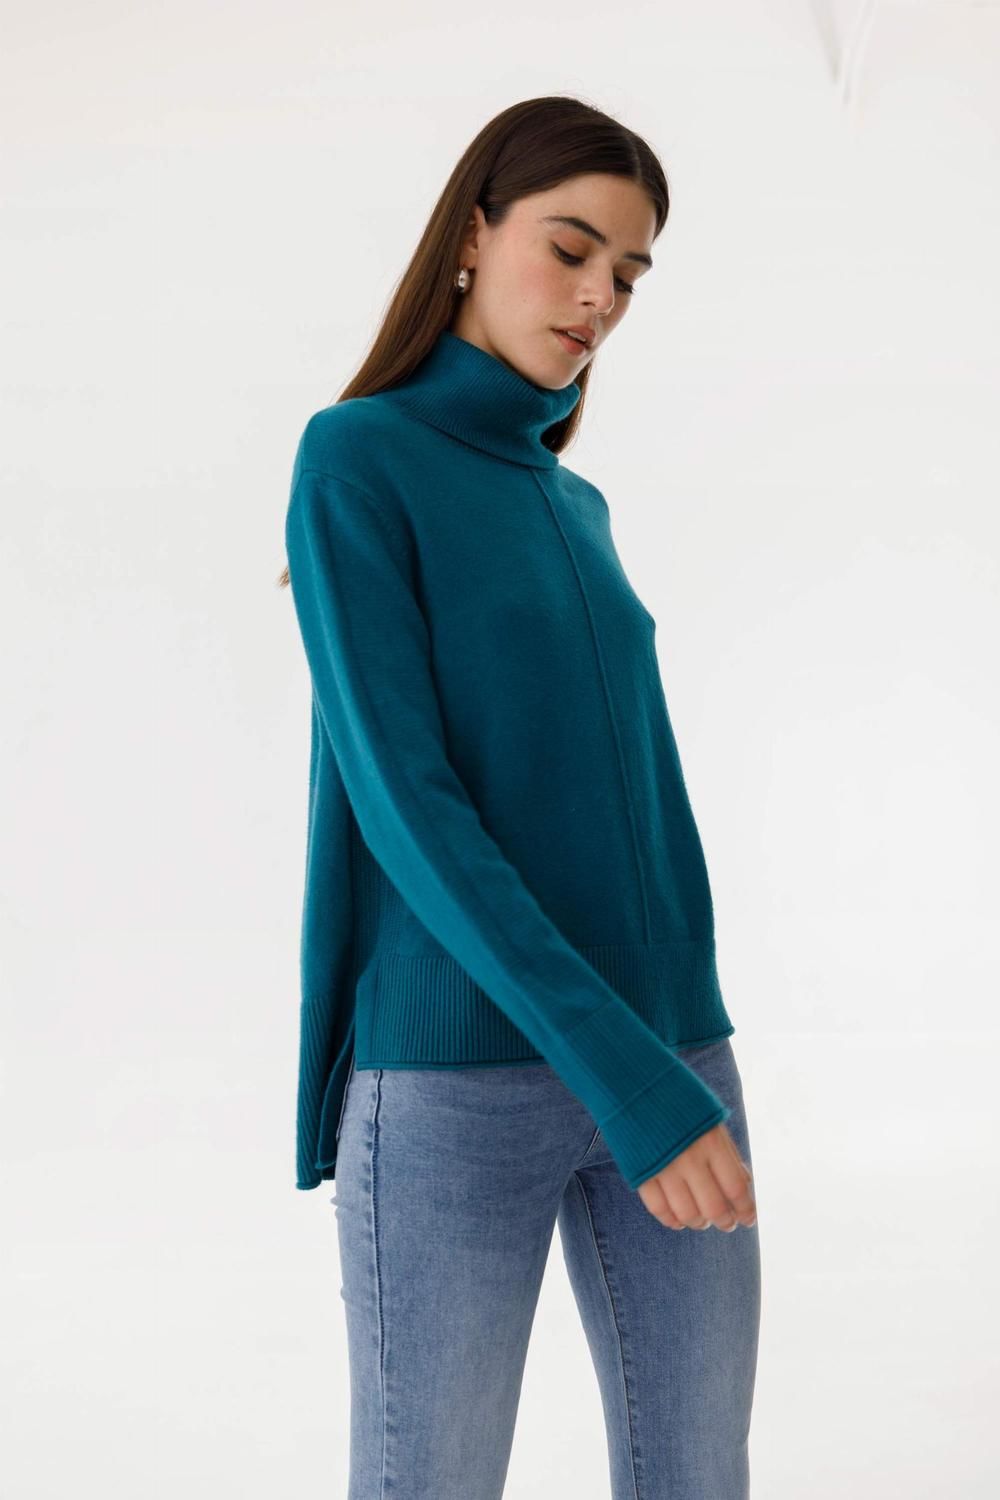 Sweater Polera Serrana petroleo talle unico